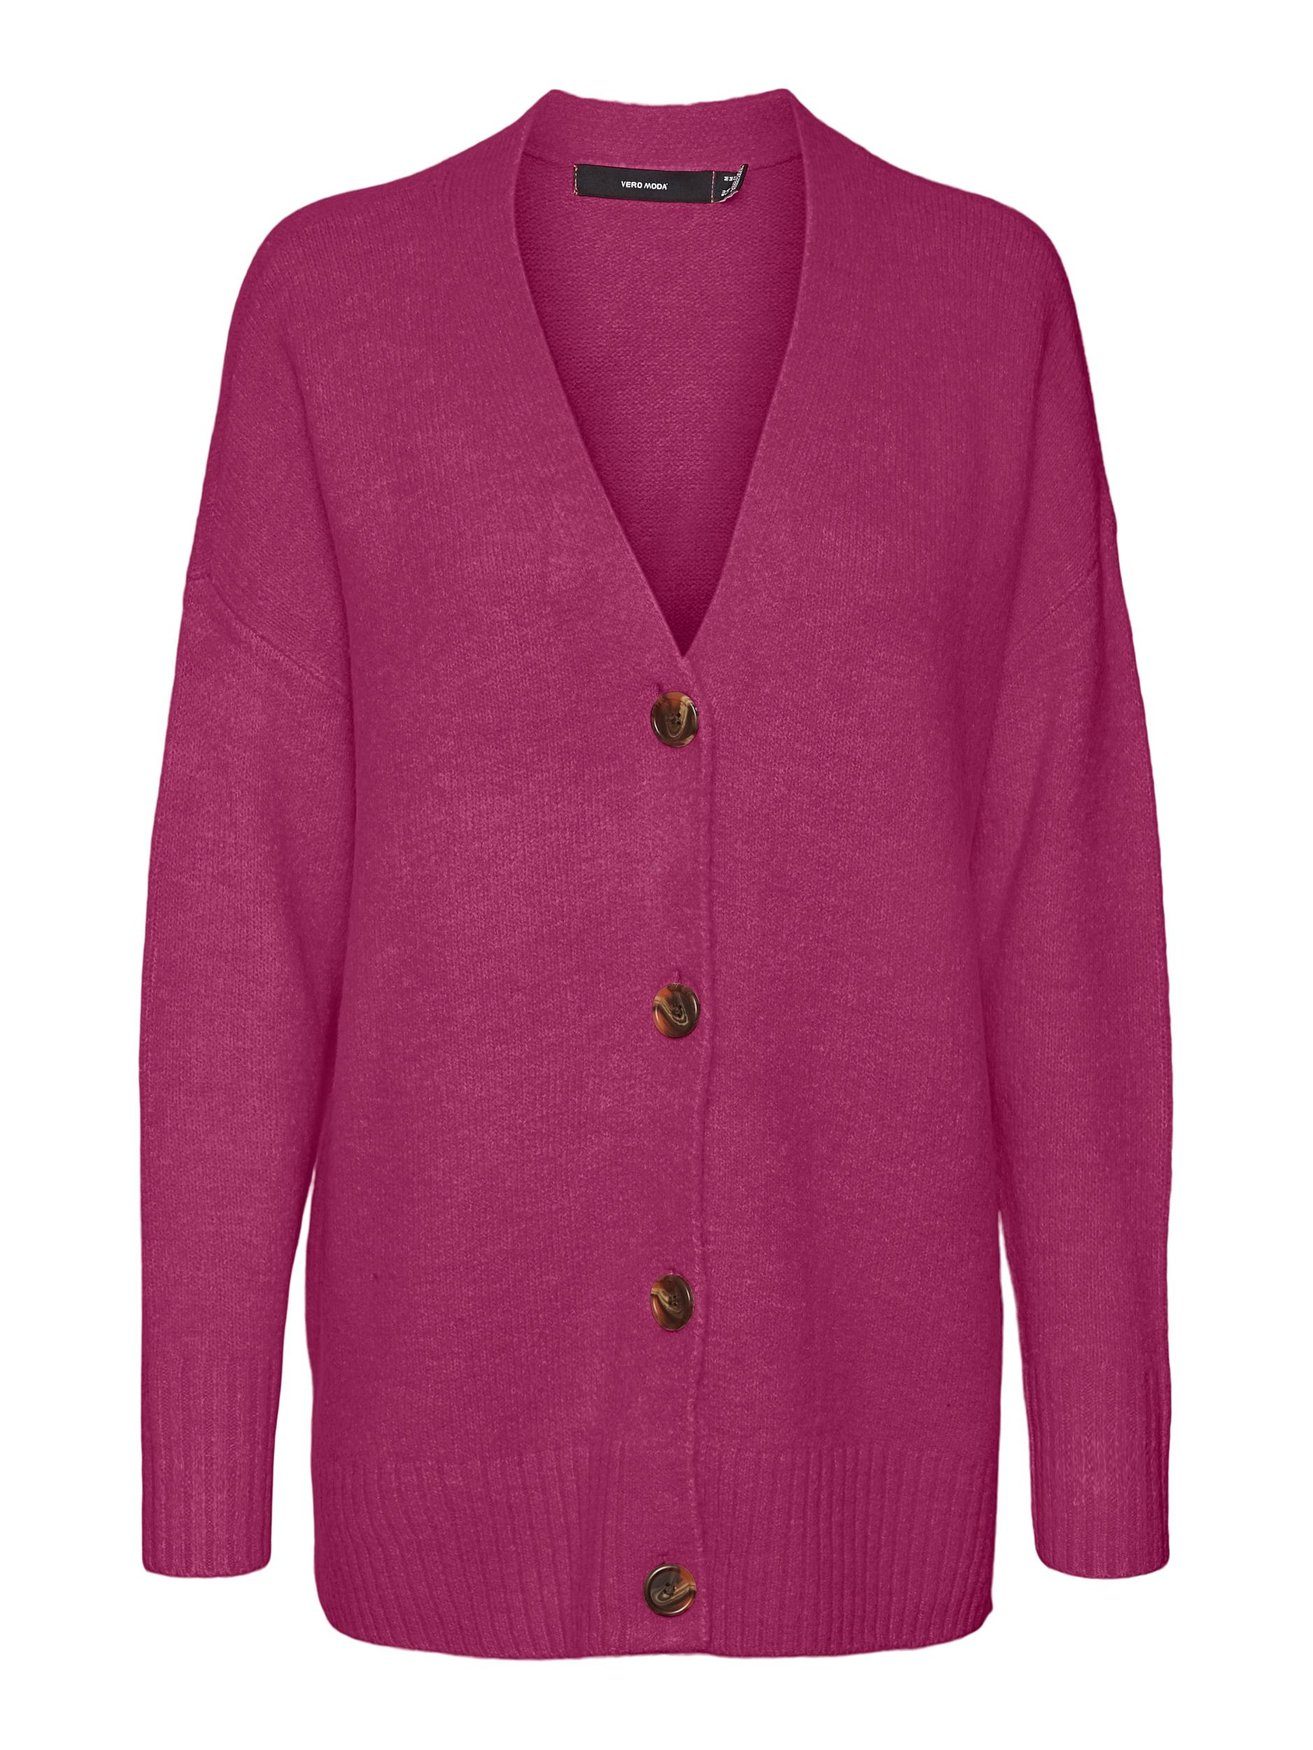 Vero Moda in Cardigan Pink Lange Cardigan Oversize 6530 Strickjacke VMLEFILE